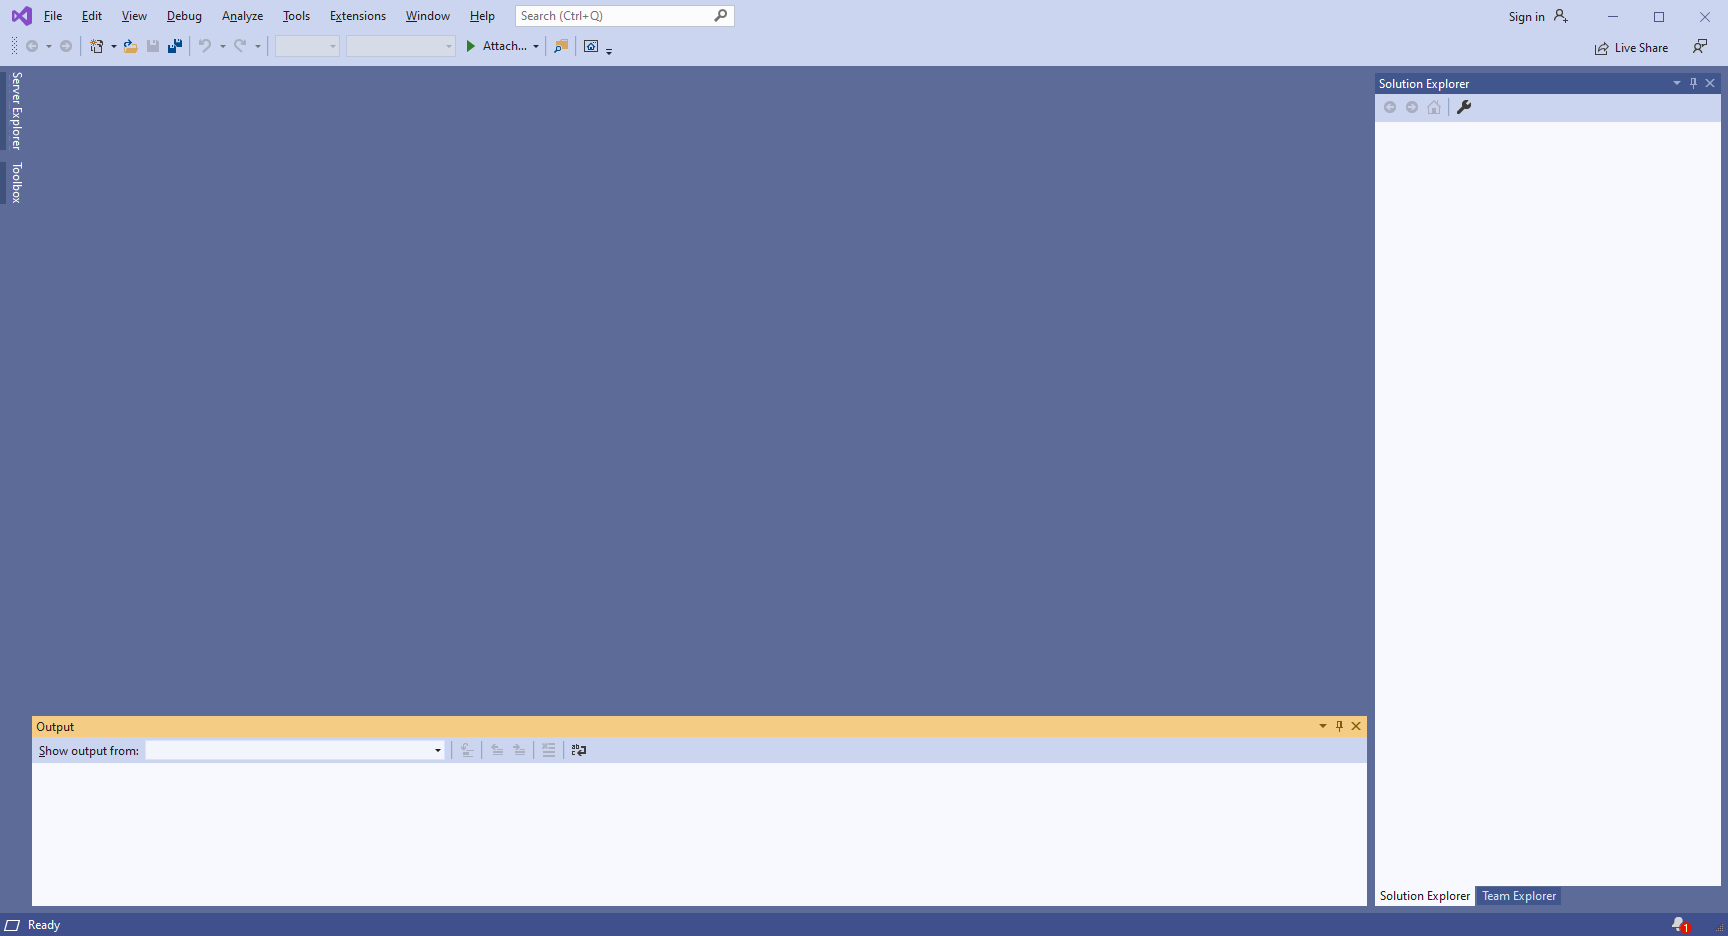 A screenshot of Visual Studio's website